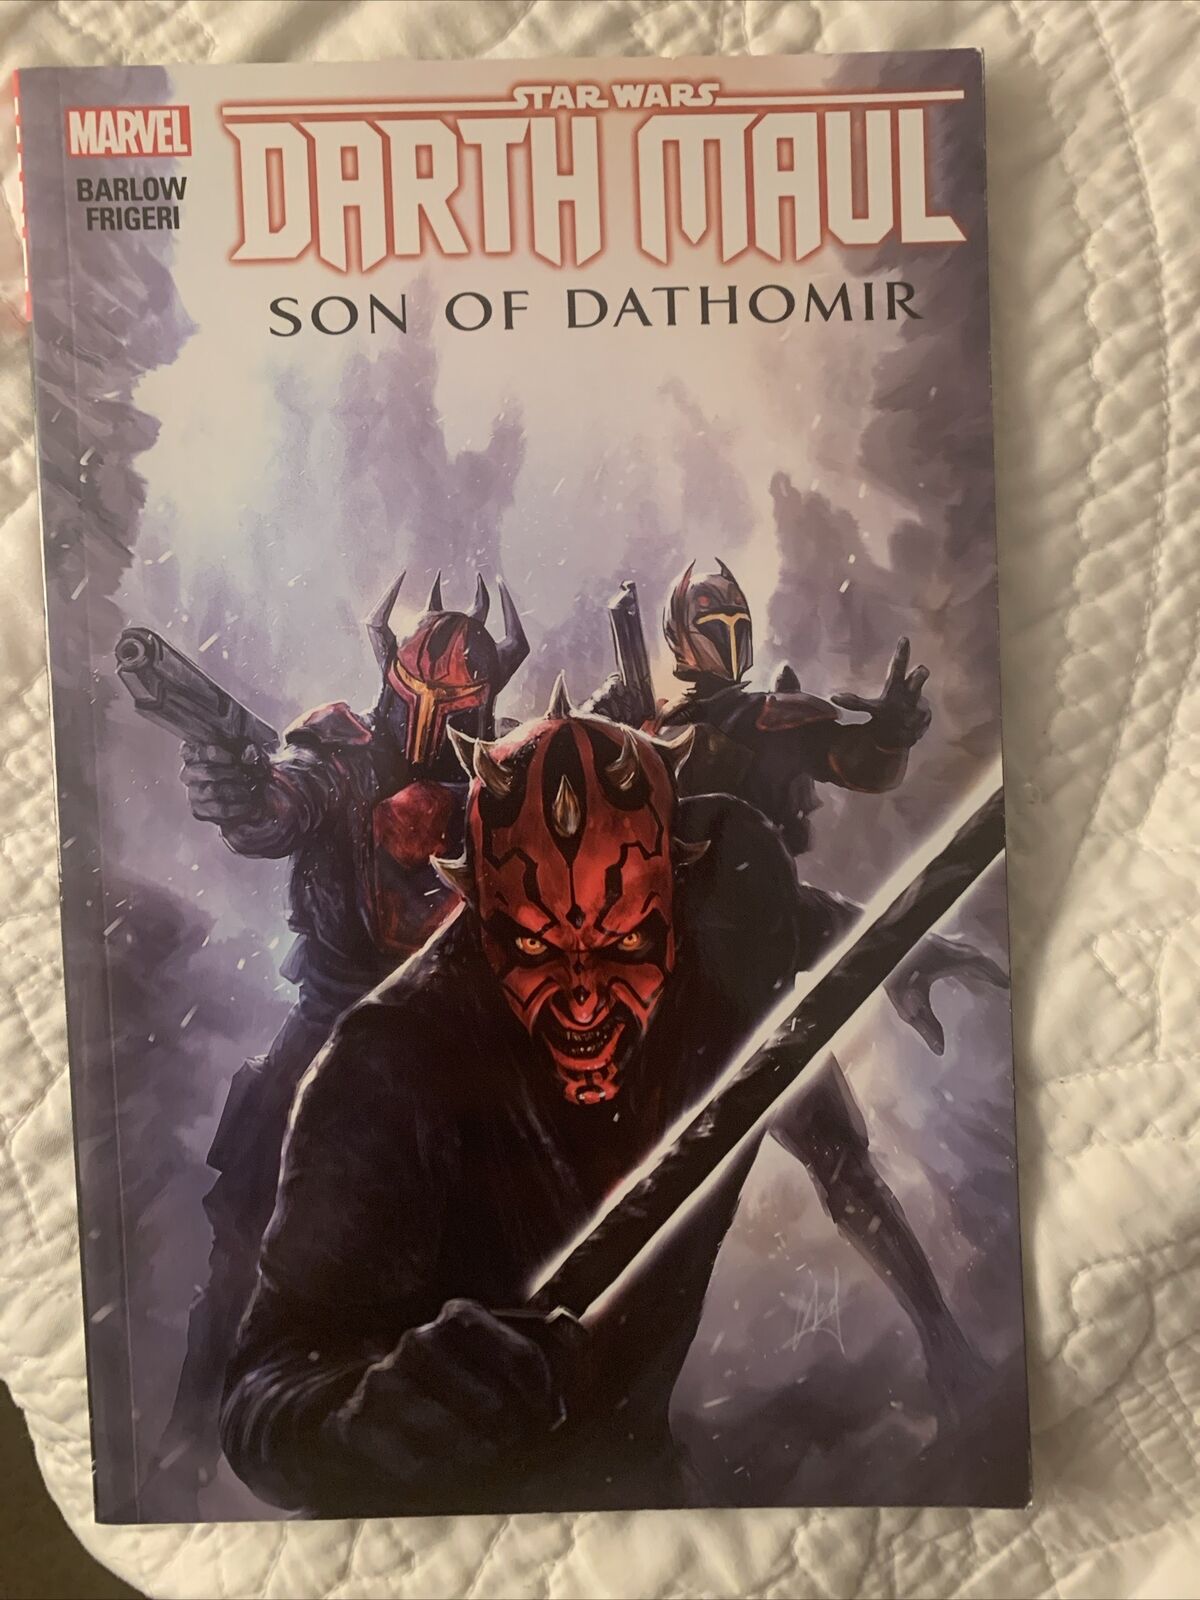 Star Wars: Darth Maul - Son of Dathomir - Second Edition (Marvel, 2017)